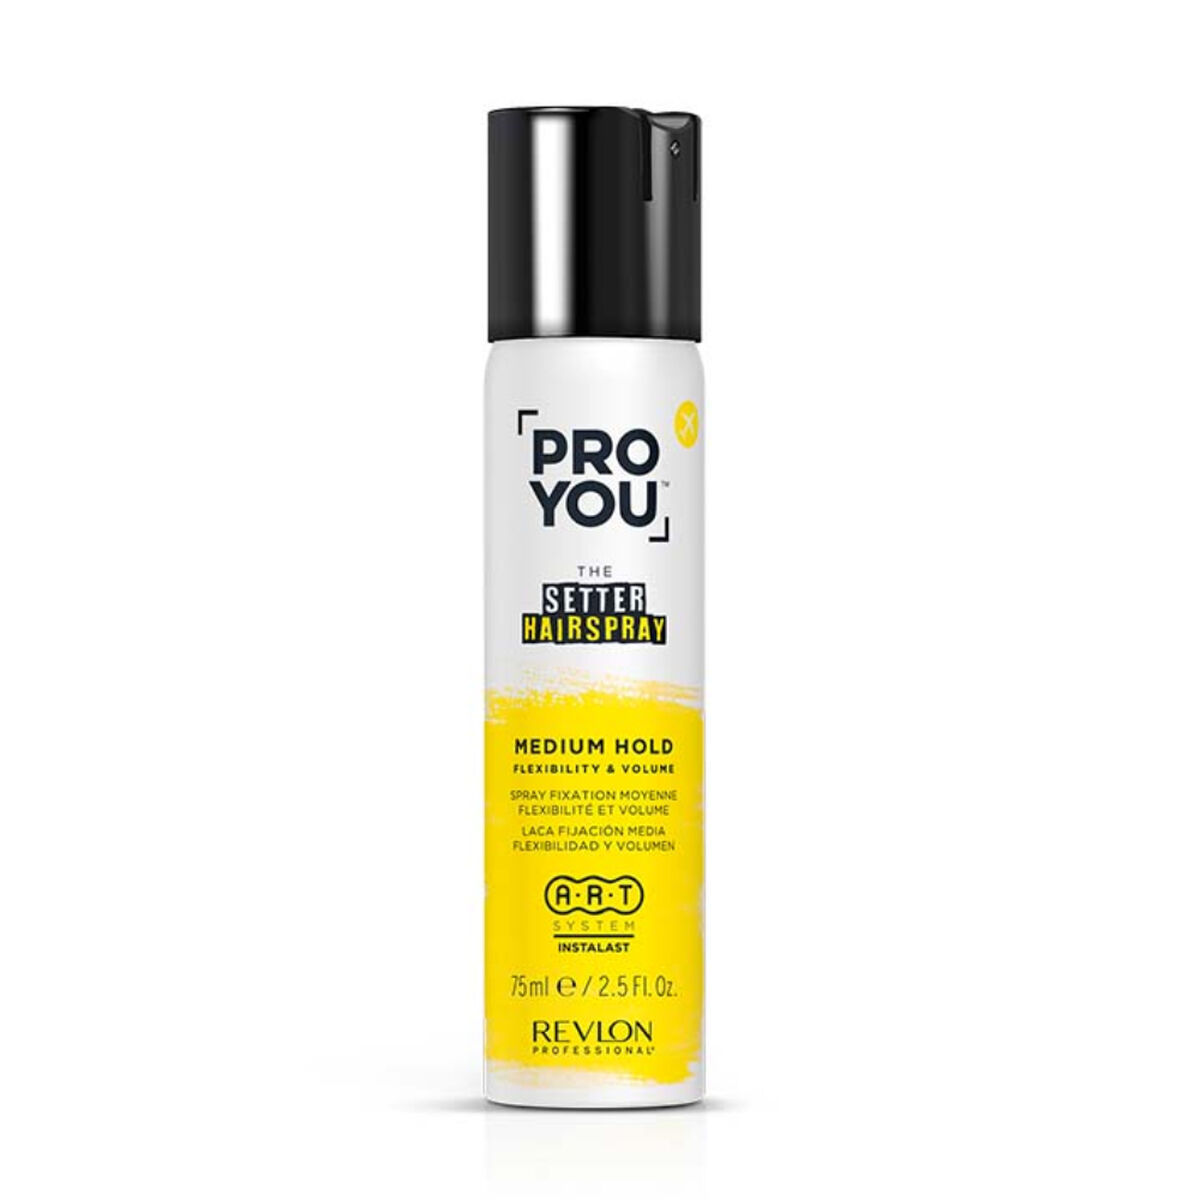 Spray Fixator Revlon Setter Hairspray Medium Hold (75 ml)